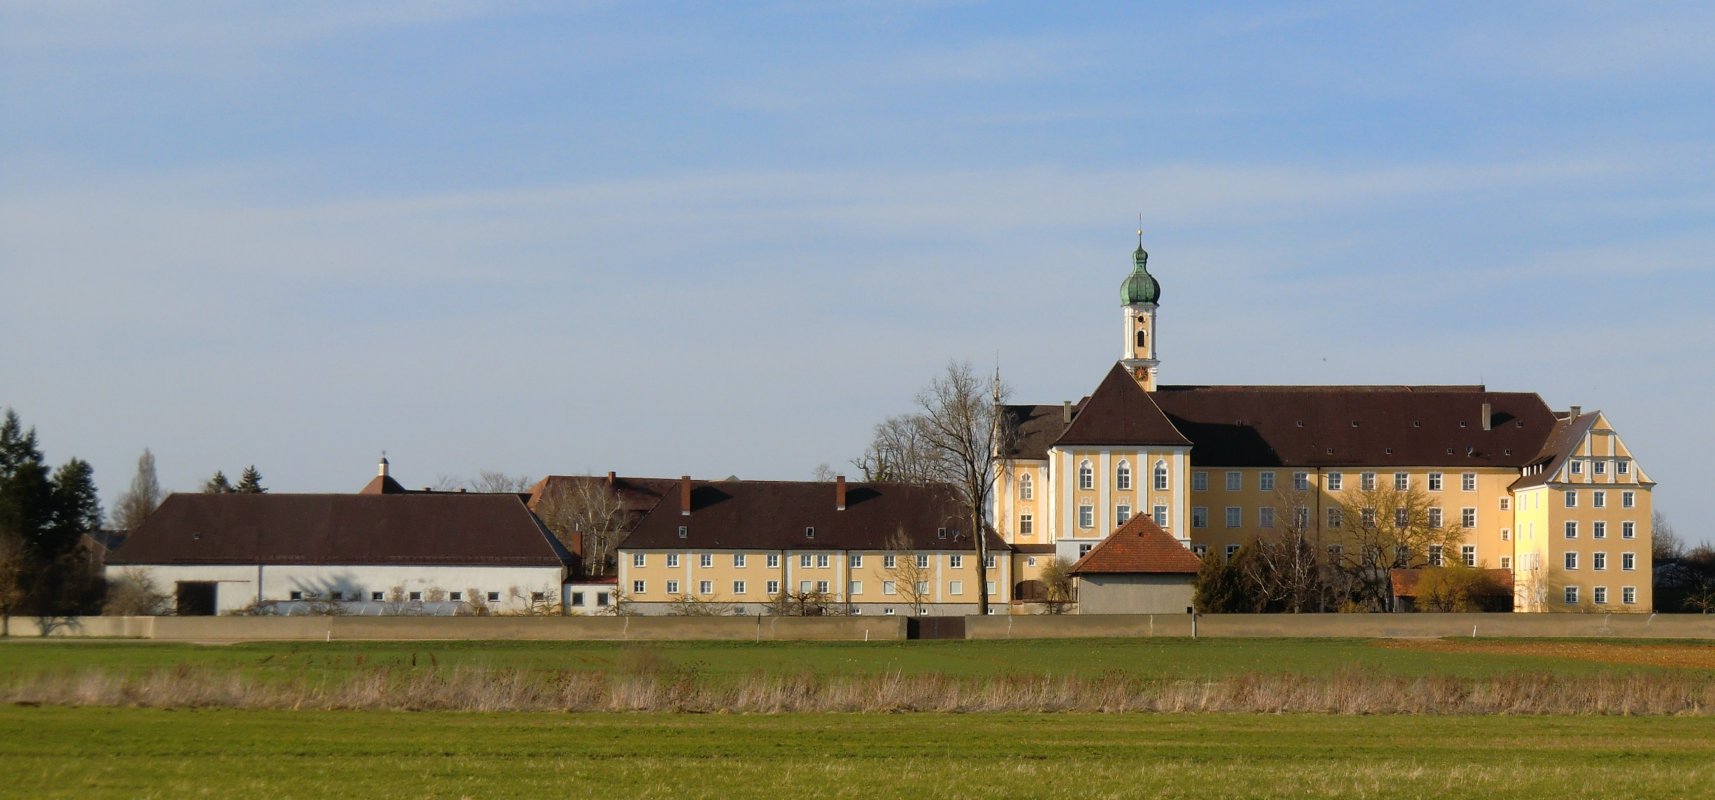 Kloster Maria Medingen in Mödingen